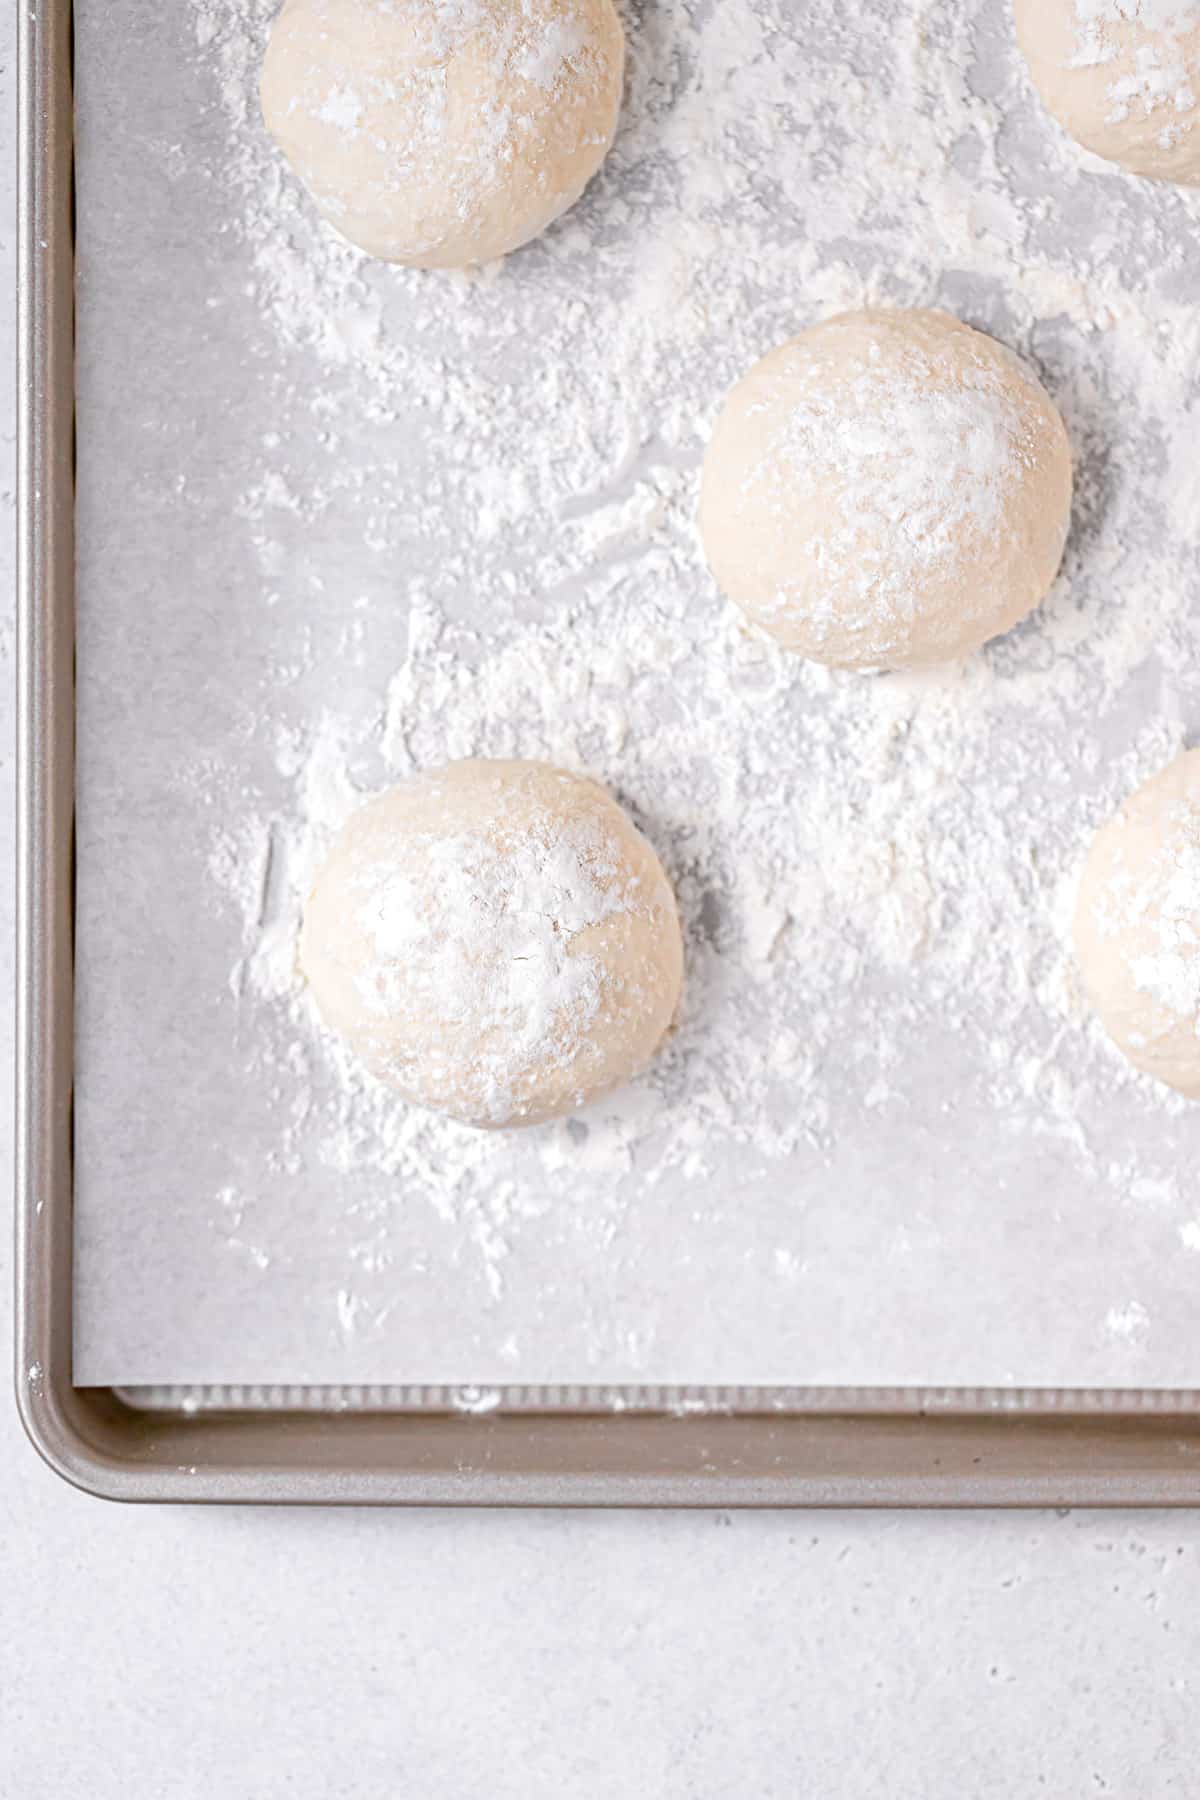 dough divided into 12 balls on baking sheet.